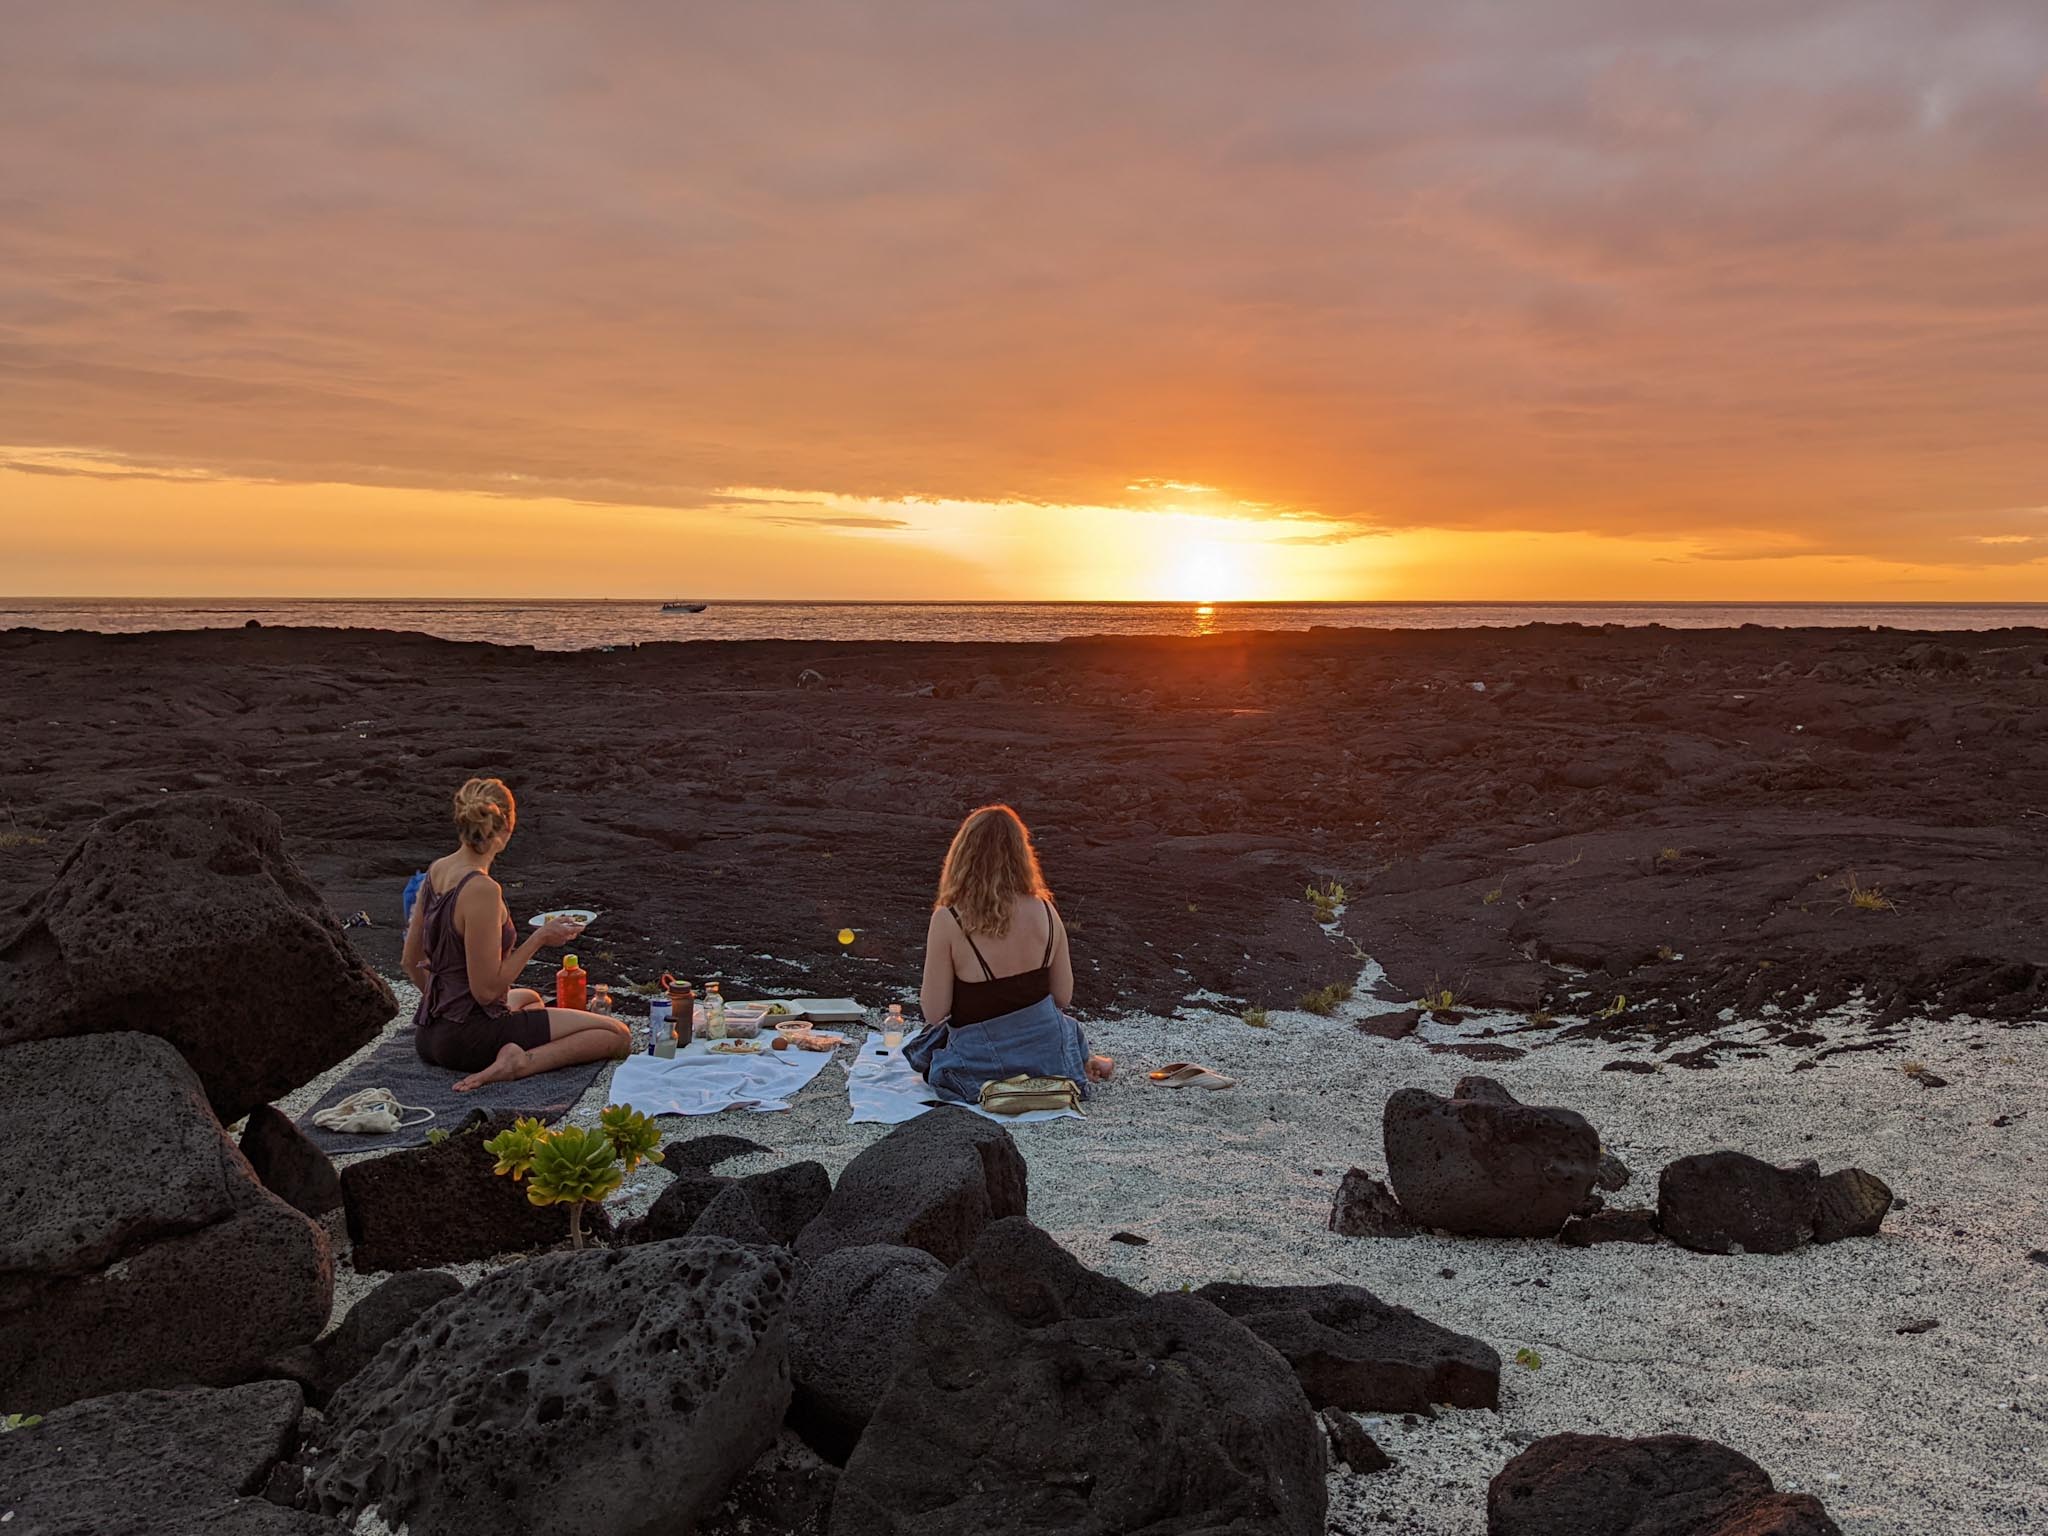 Erin and Andrea having a picnic while watching a sunset at Kohanaiki Beach Park.